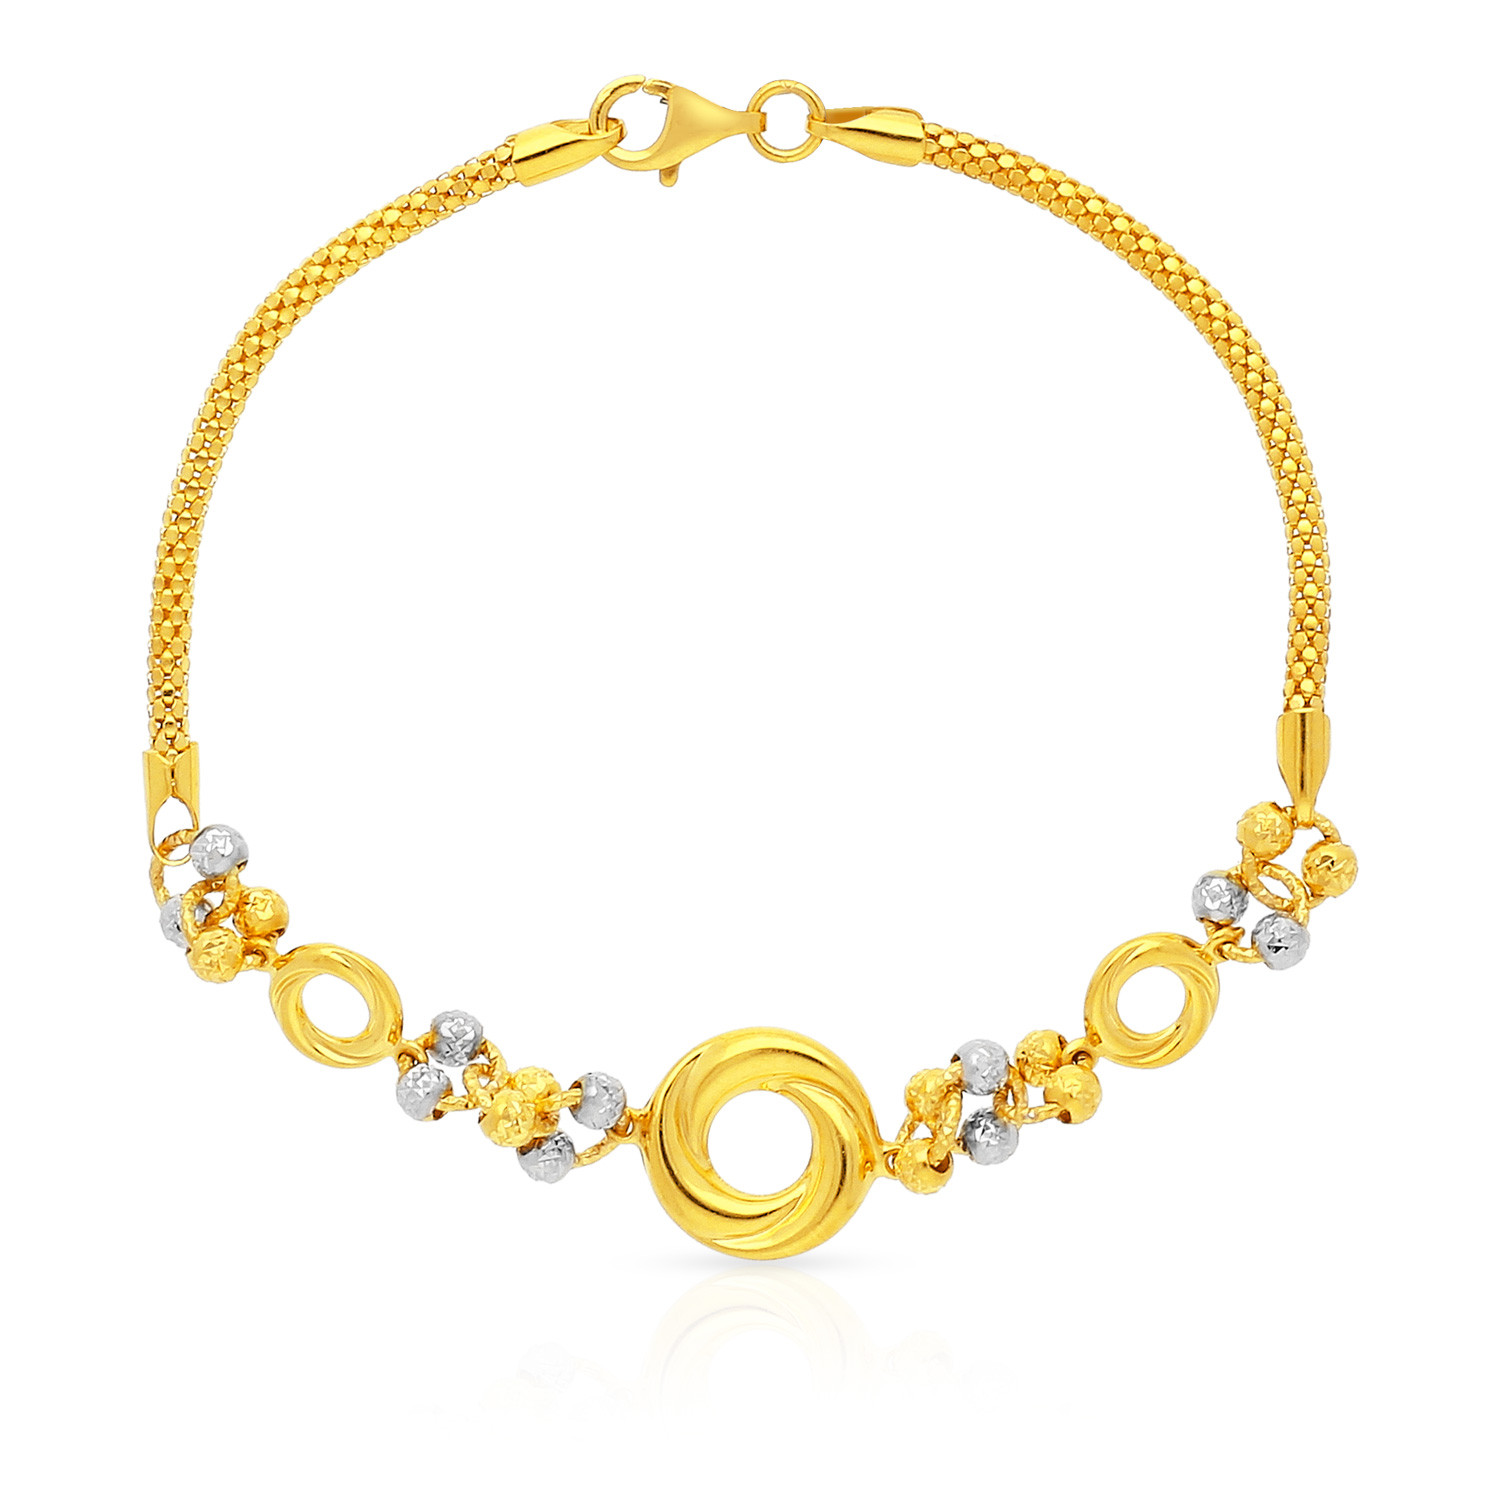 gold bangles indian design | daily wear | brides | Bracelet Designs |  Latest Bangle Collection | Gold bangles indian, Bangle designs, Gold bangles